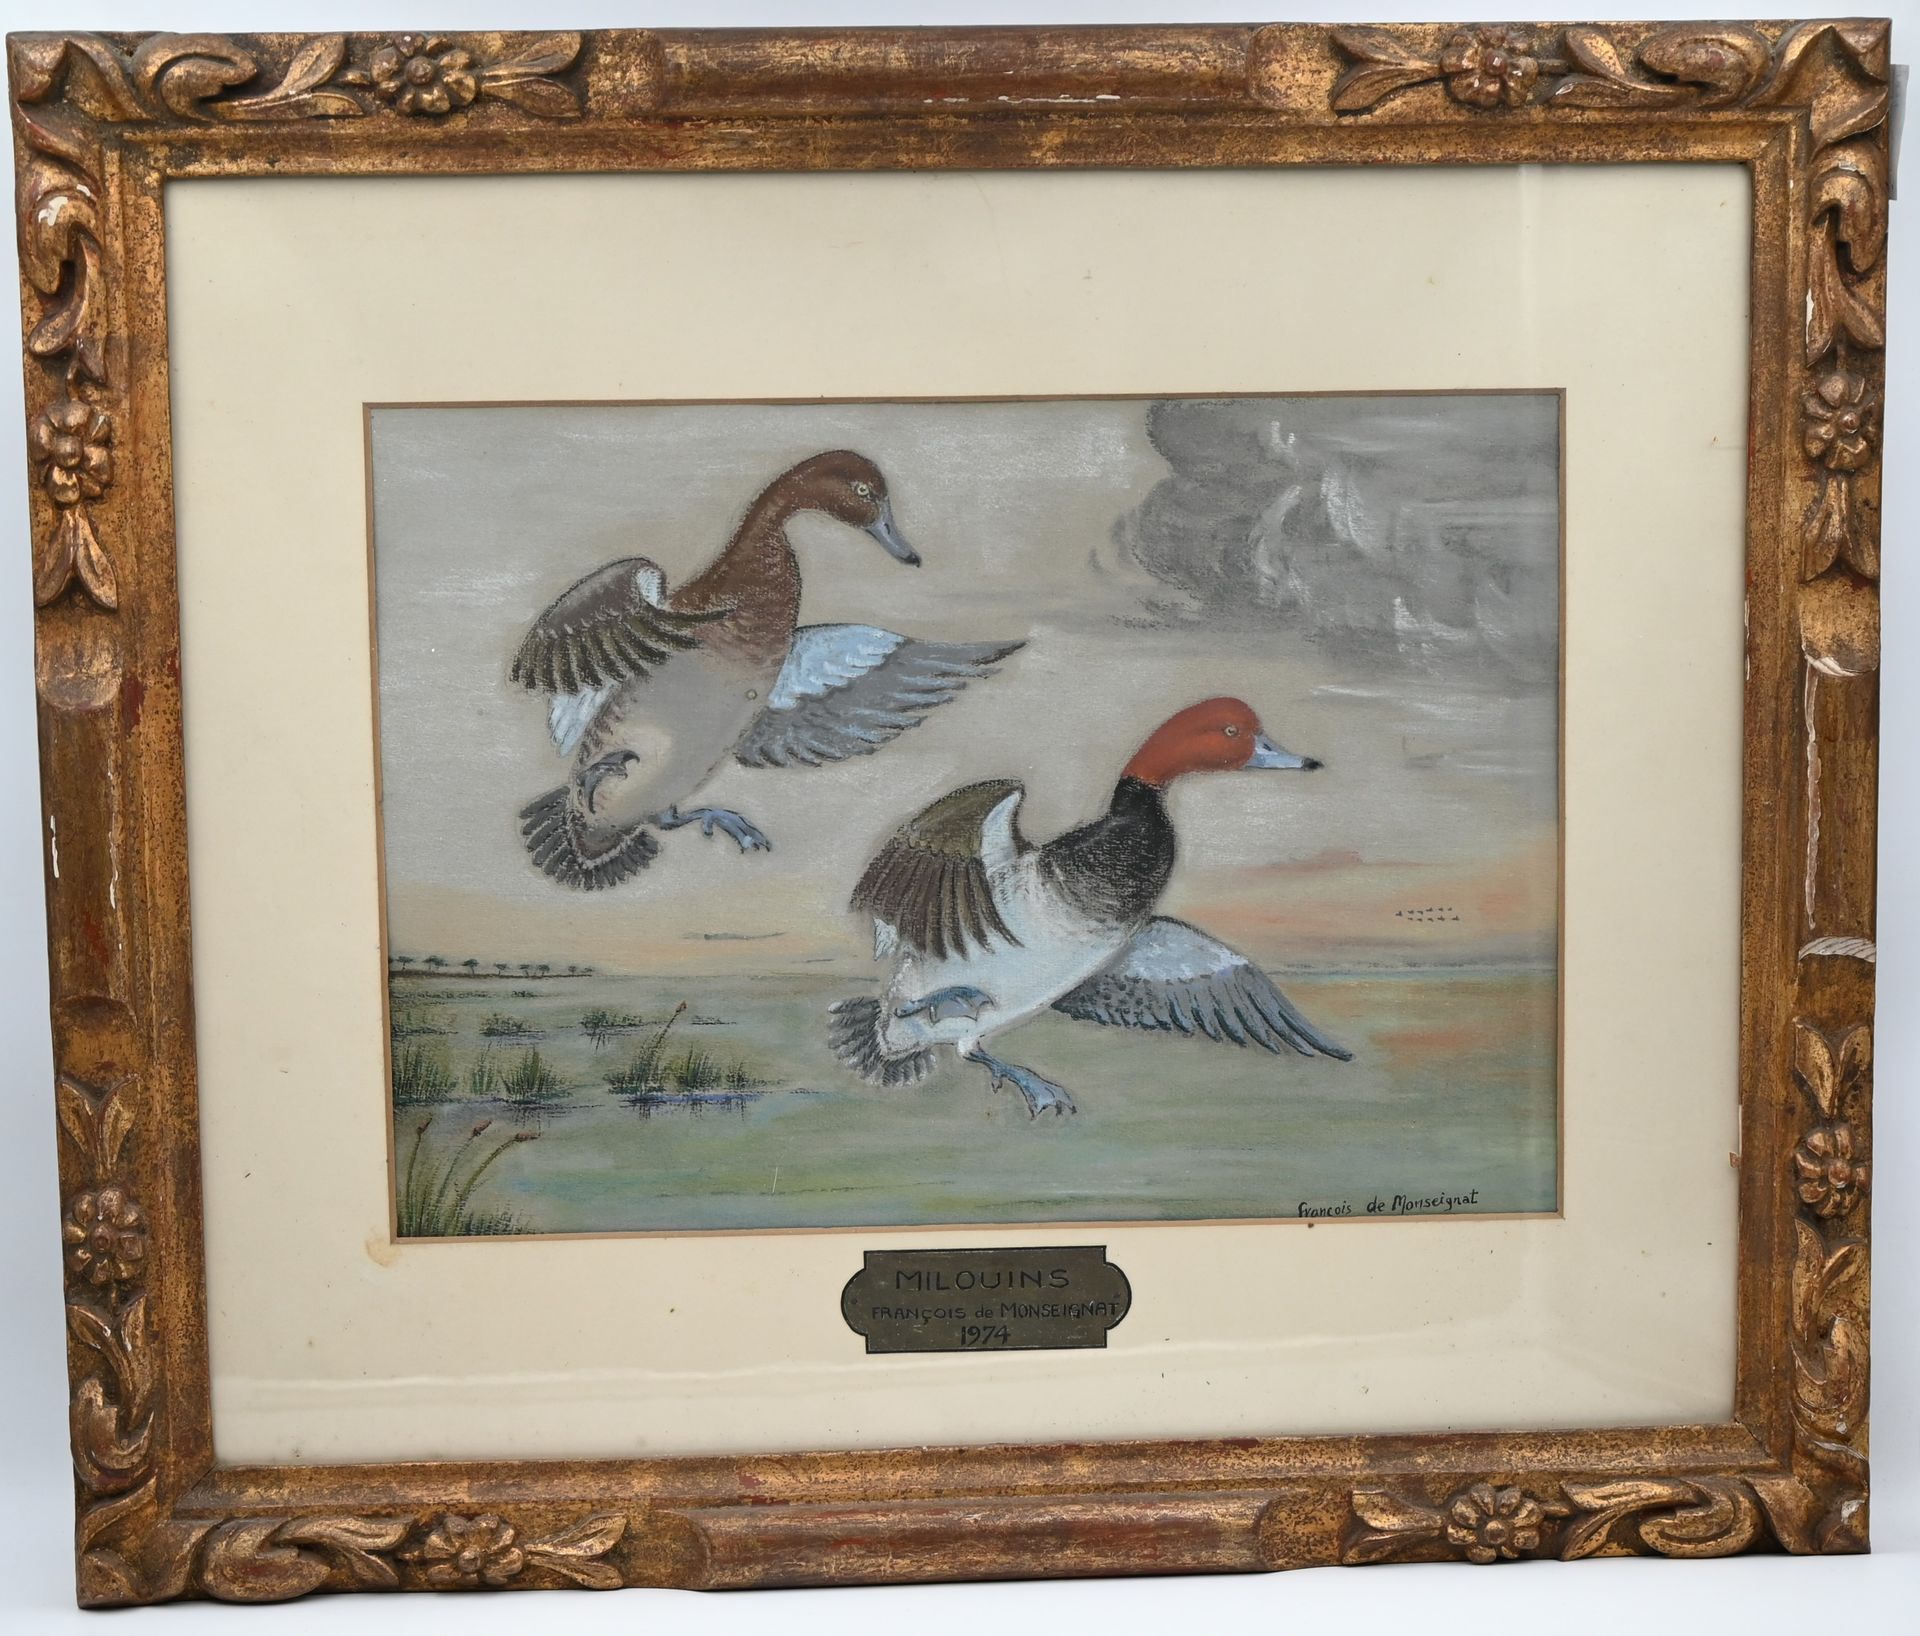 Null 弗朗索瓦-德-蒙塞纳（二十世纪）：米卢因的鸭子。粉彩画，右下角有签名，标题为 "1974年"。高度24 - 宽度34厘米